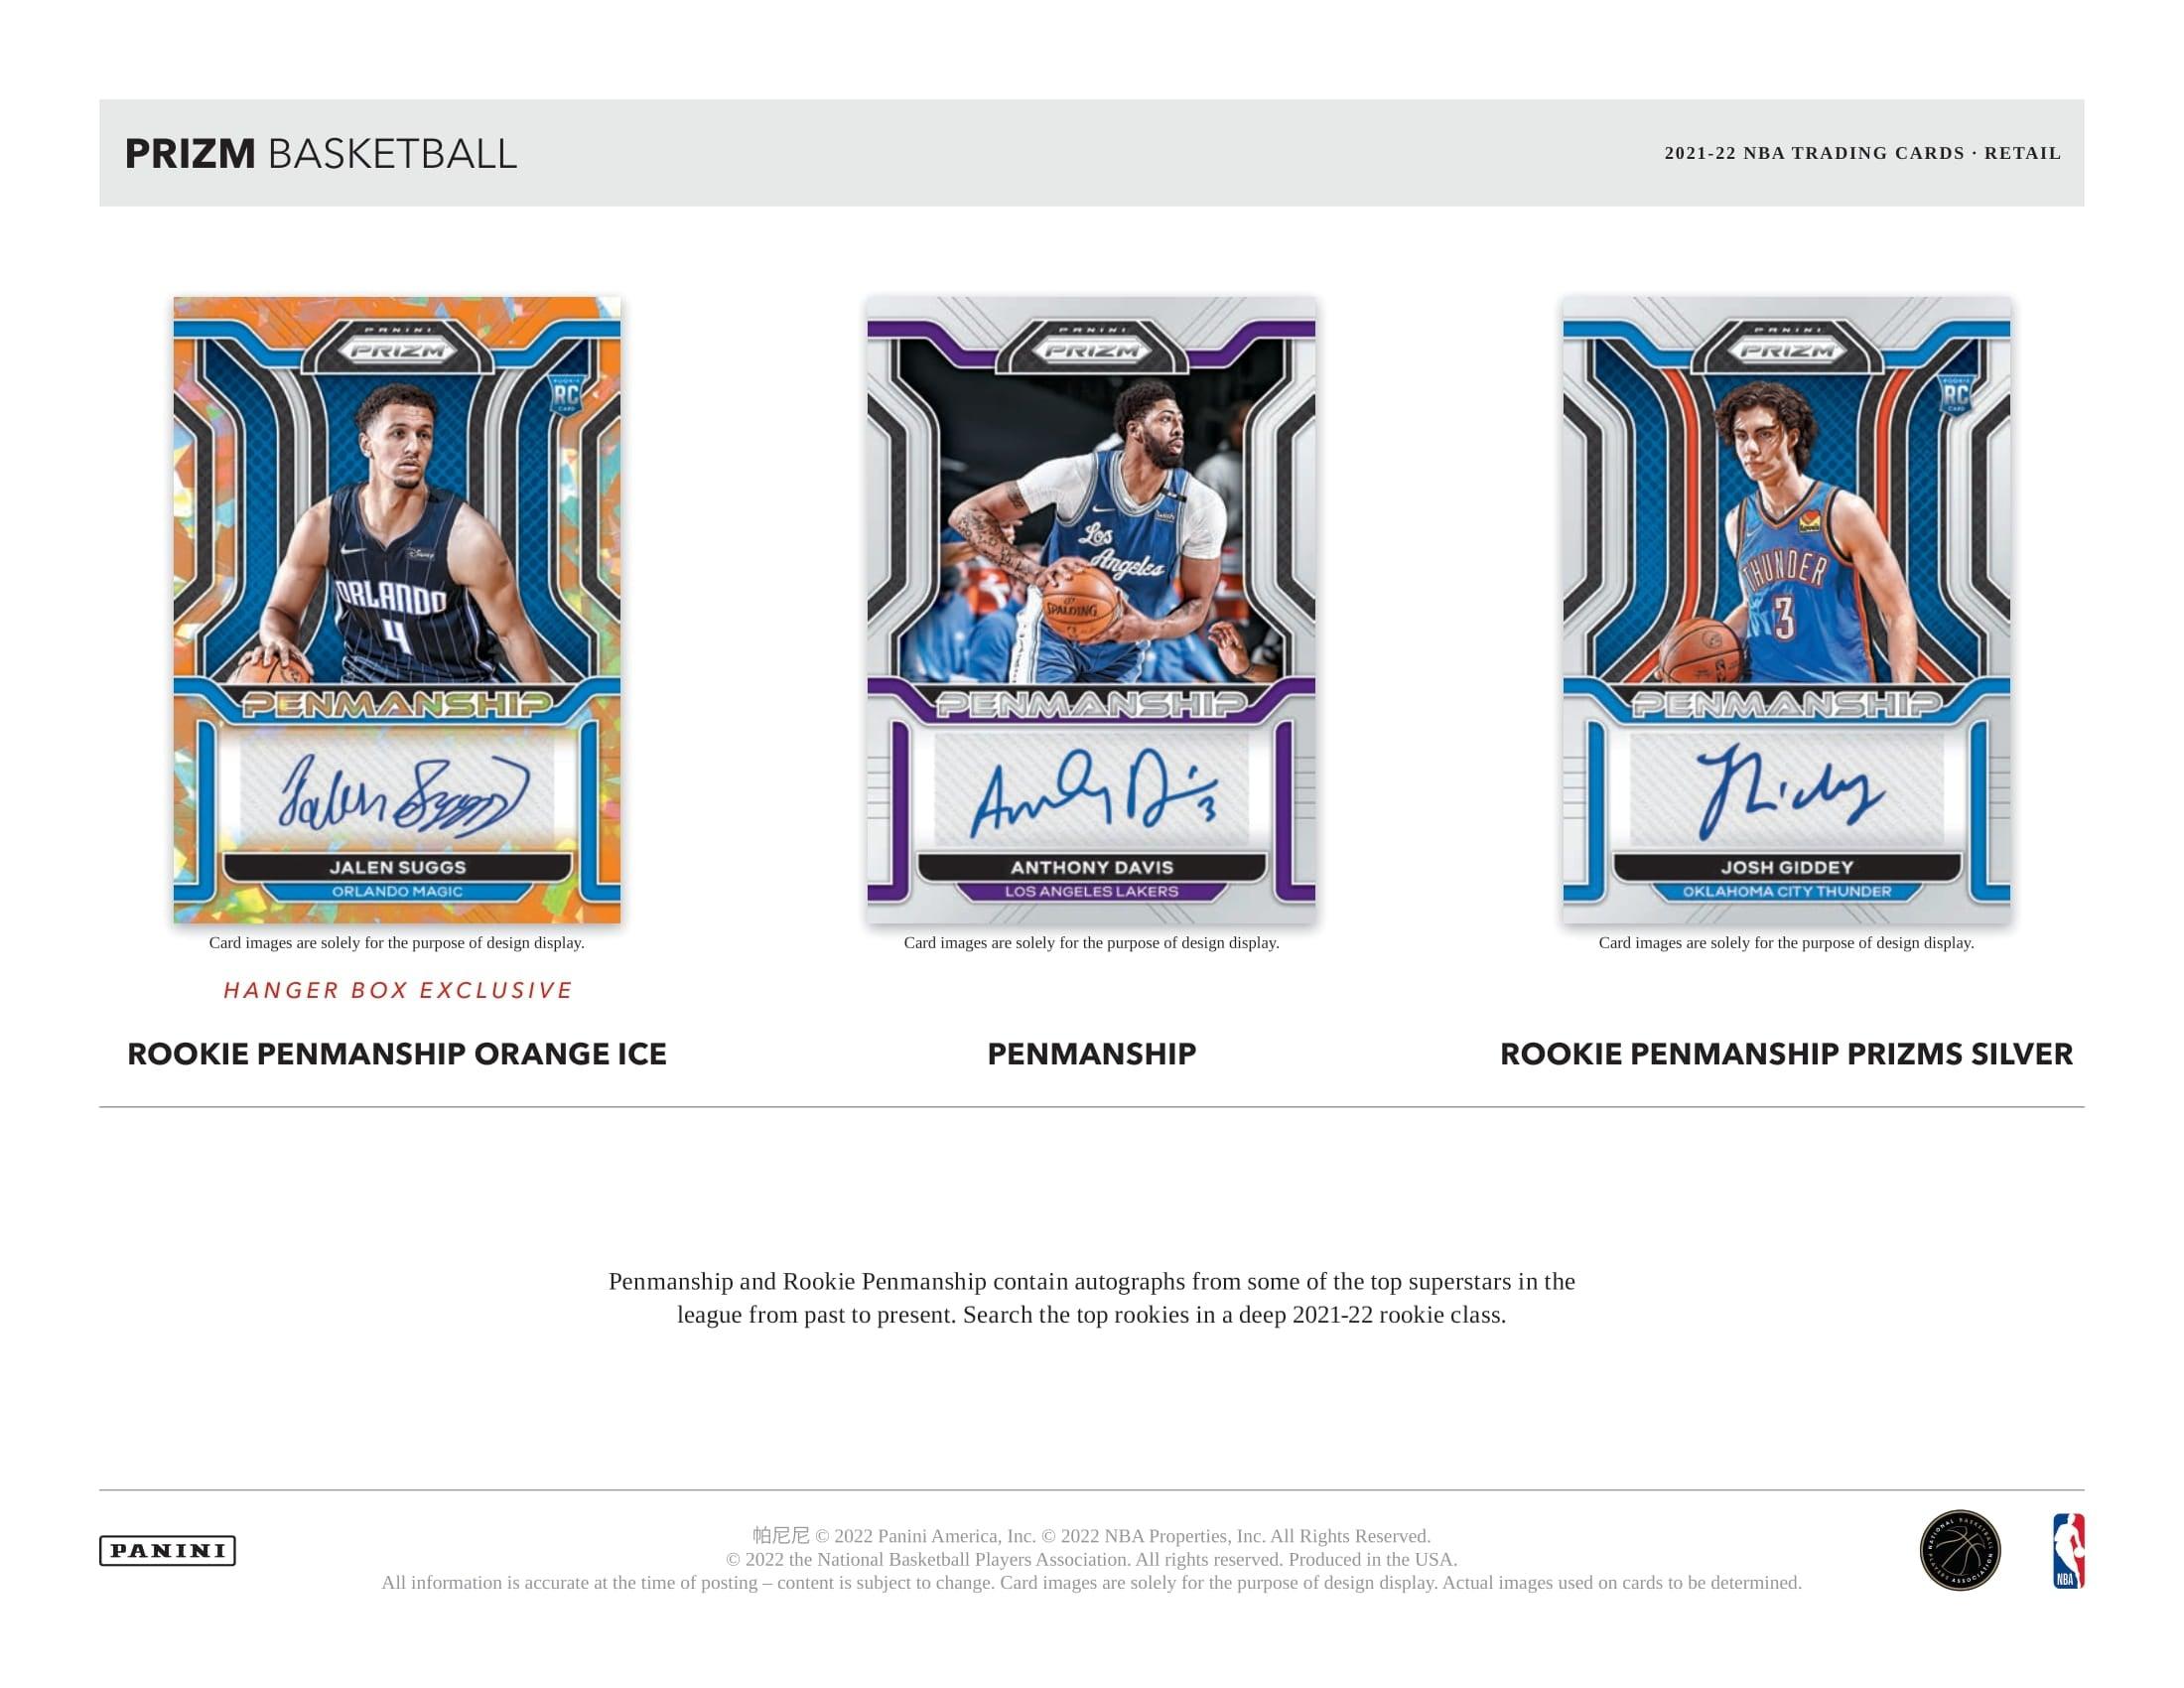 Panini - 2021/22 Prizm Basketball (NBA) - Multi-Pack Box - The Card Vault